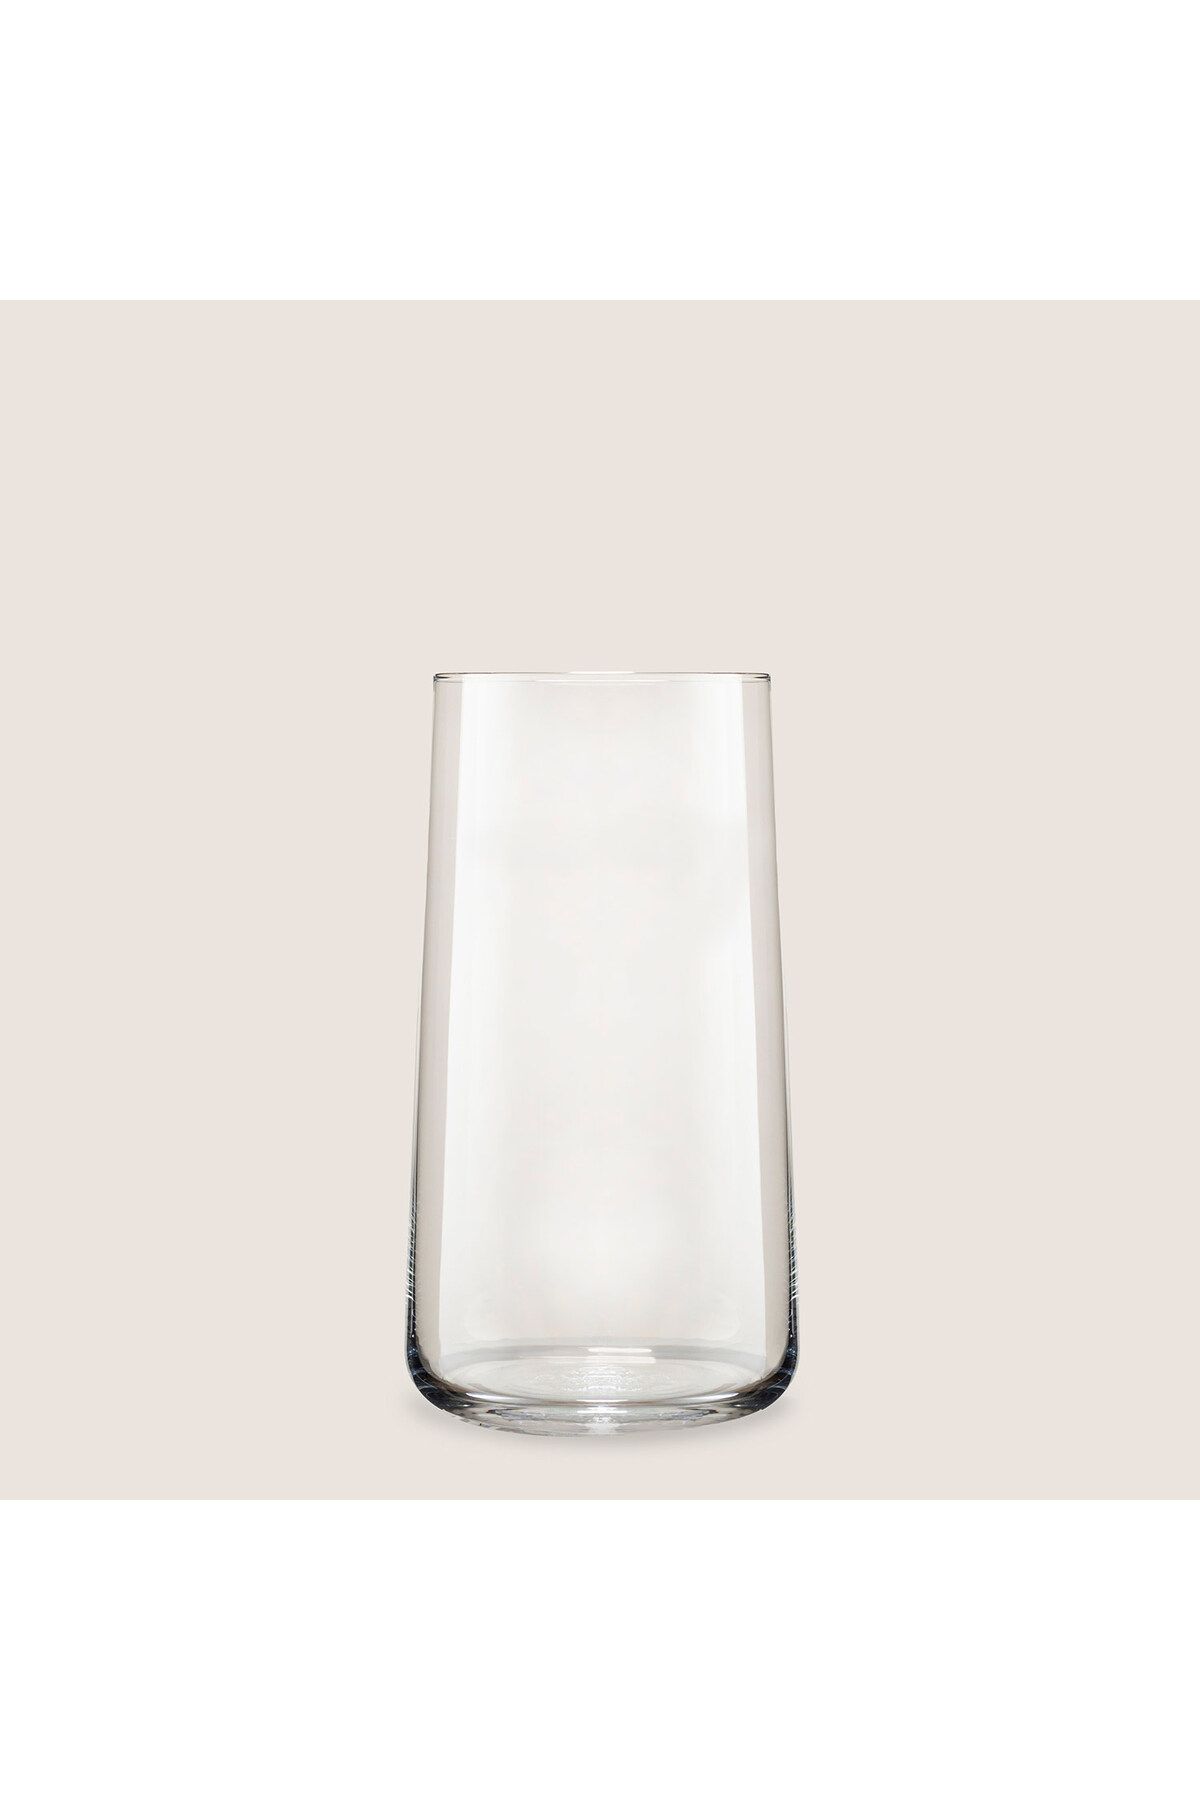 Chakra Arletta Meşrubat Bardağı 540 ml Standart